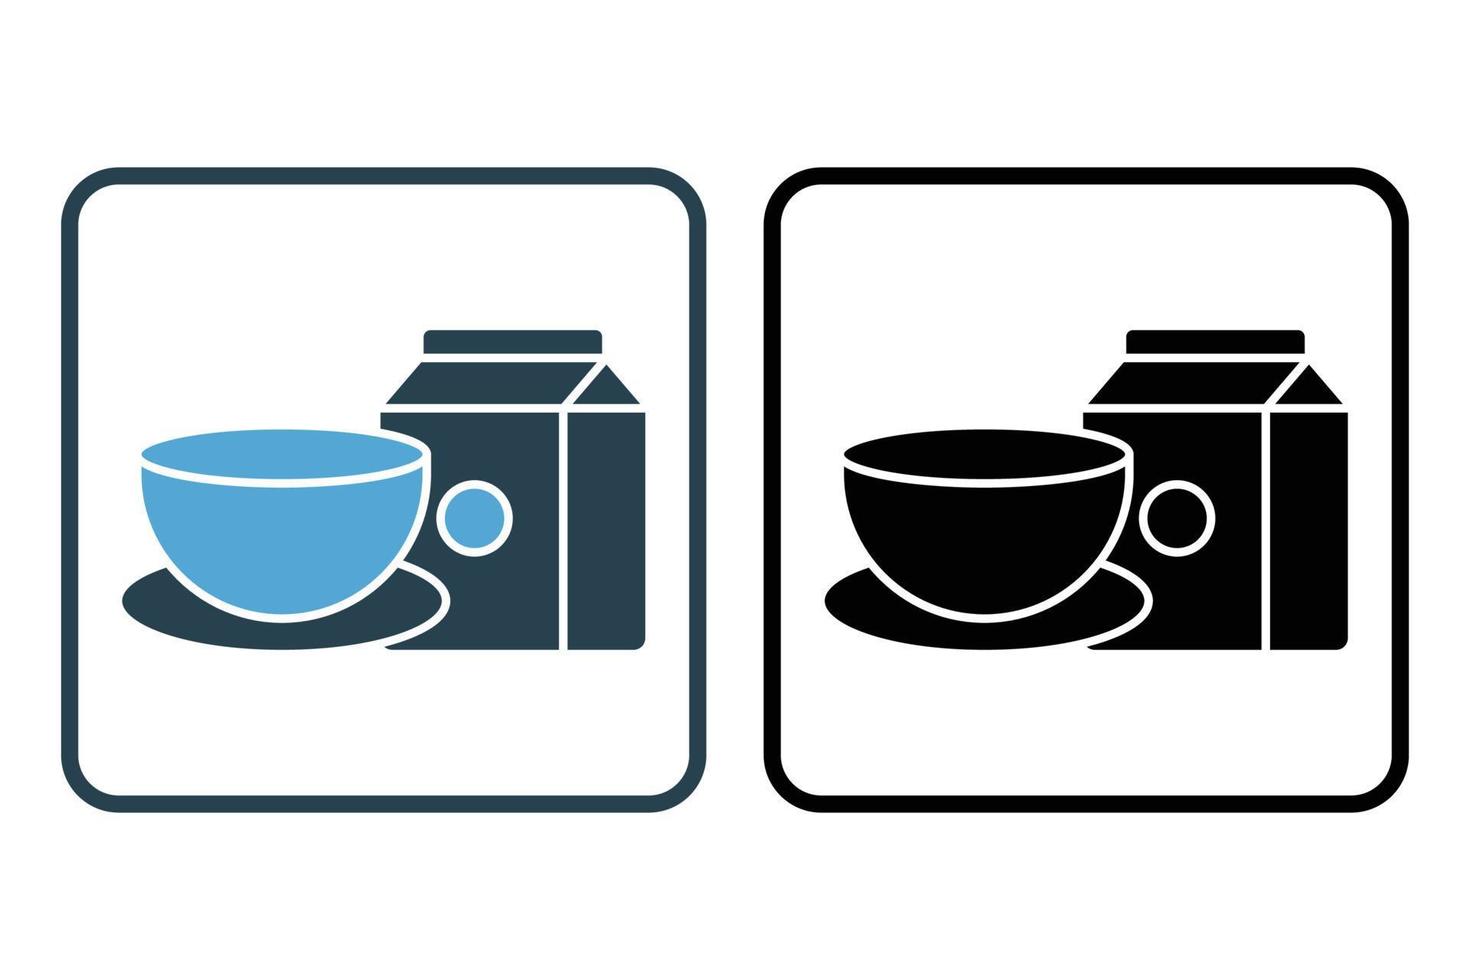 Breakfast icon illustration. Milk icon, bowl. Solid icon style. Simple vector design editable